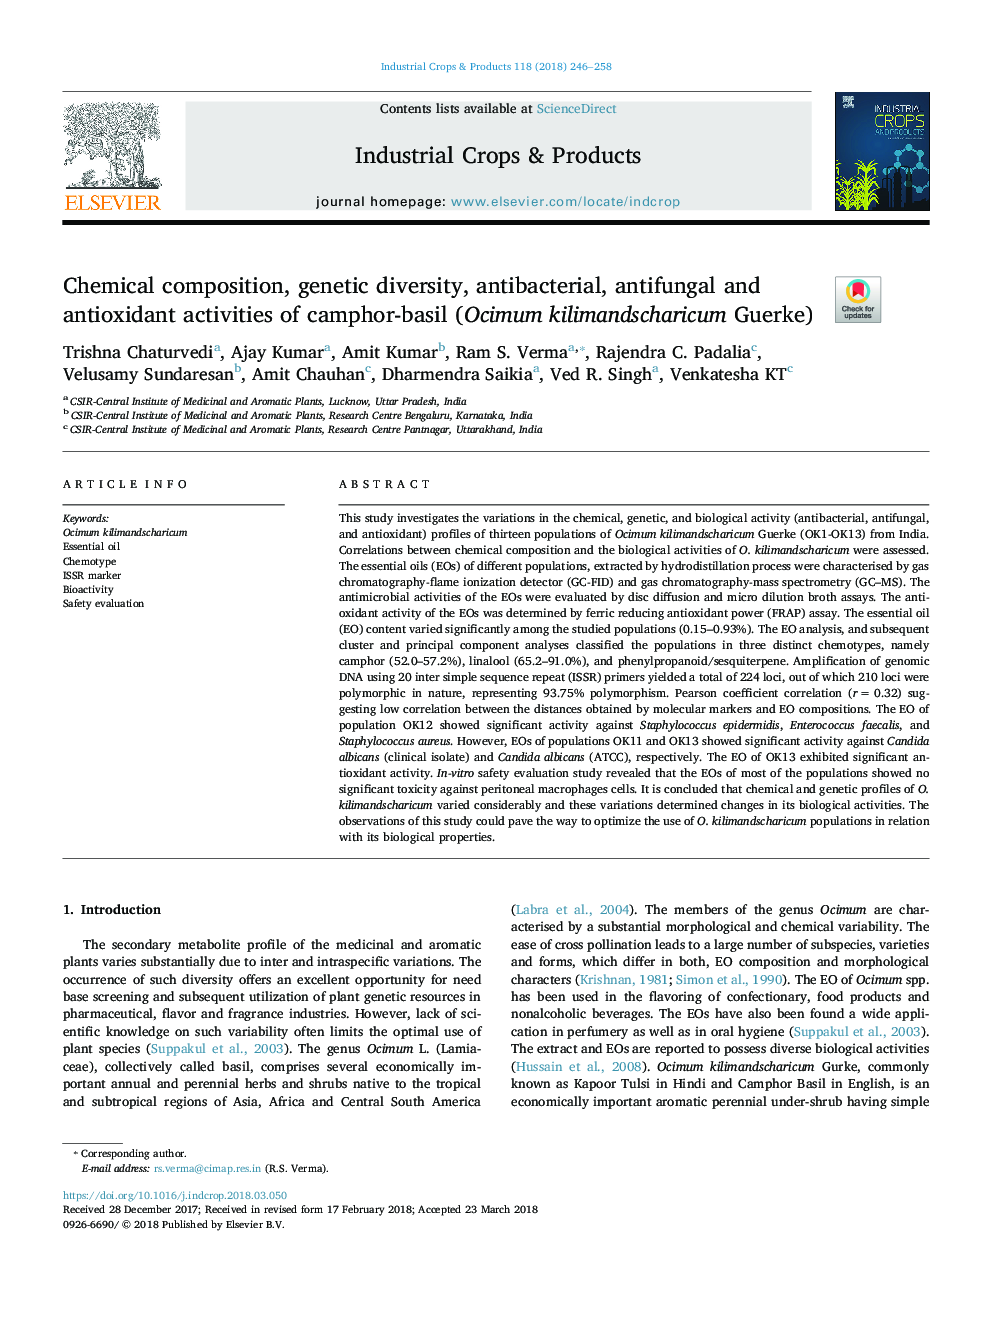 Chemical composition, genetic diversity, antibacterial, antifungal and antioxidant activities of camphor-basil (Ocimum kilimandscharicum Guerke)